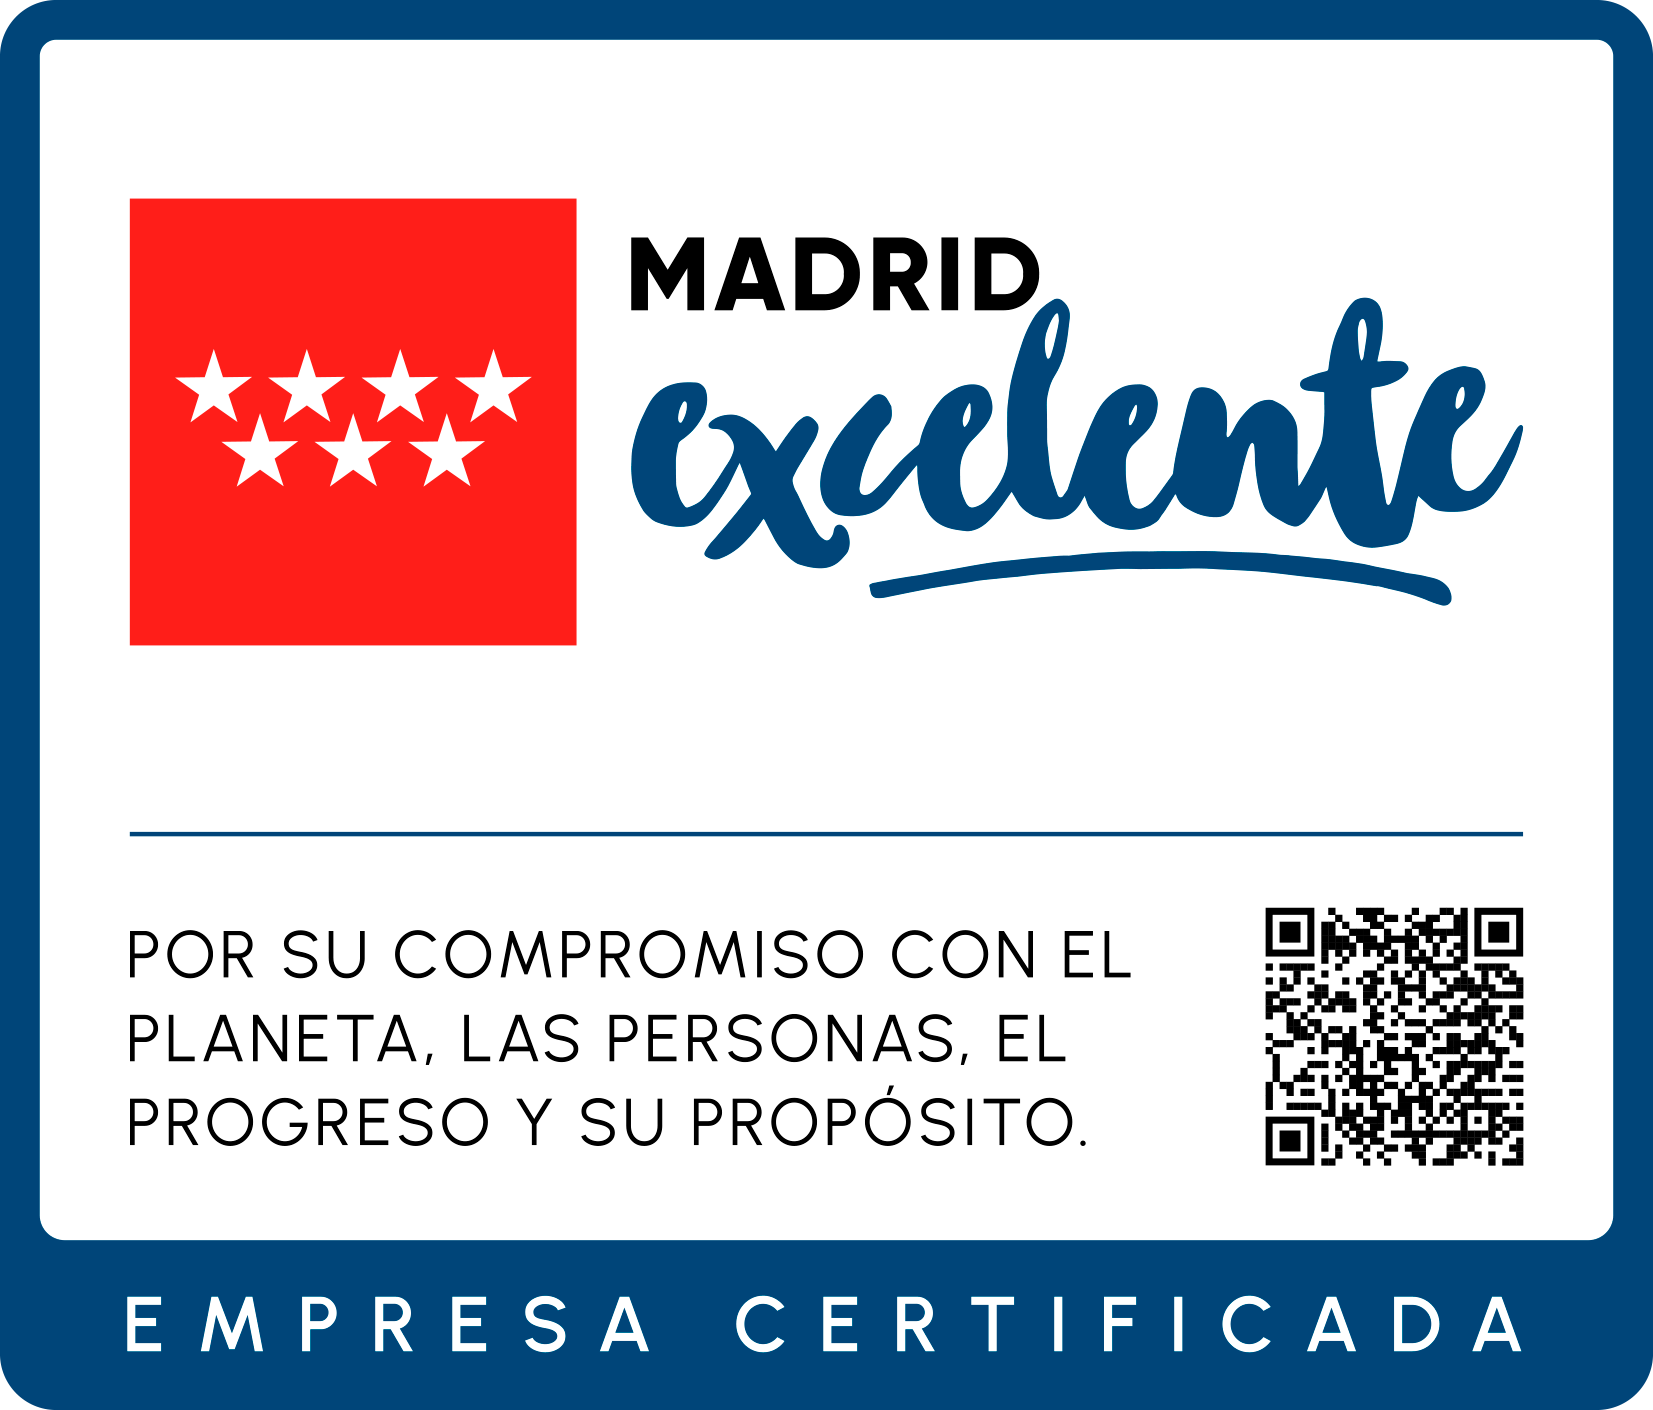 Mutua Universal rep el segell Madrid Excel·lent